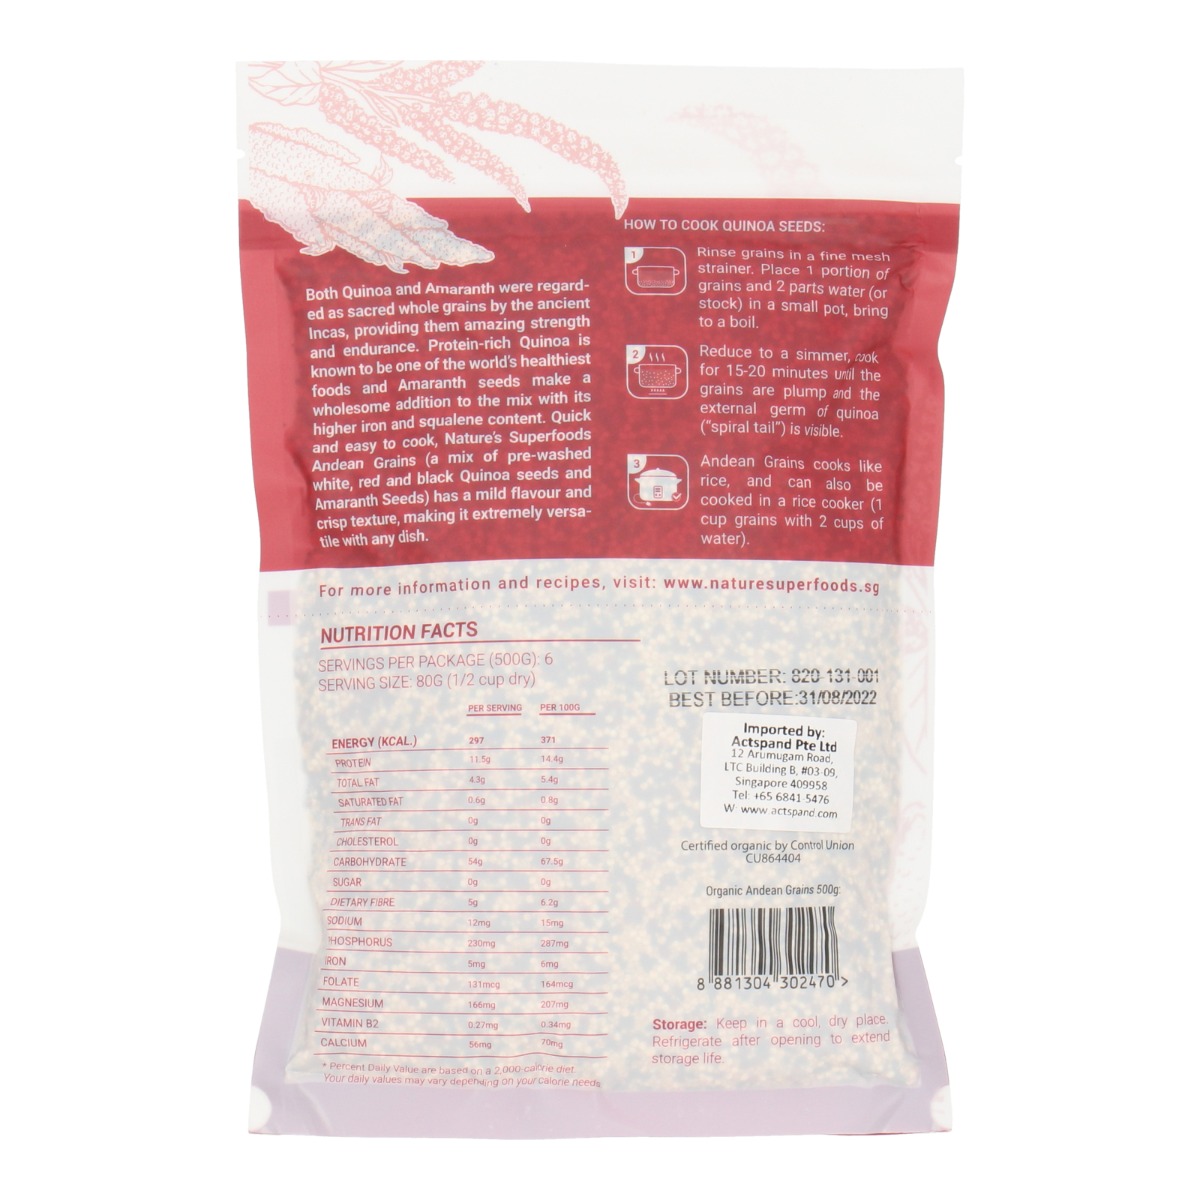 Organic Quinoa & Amaranth (Andean Grains Medley)-500g resealable pack back